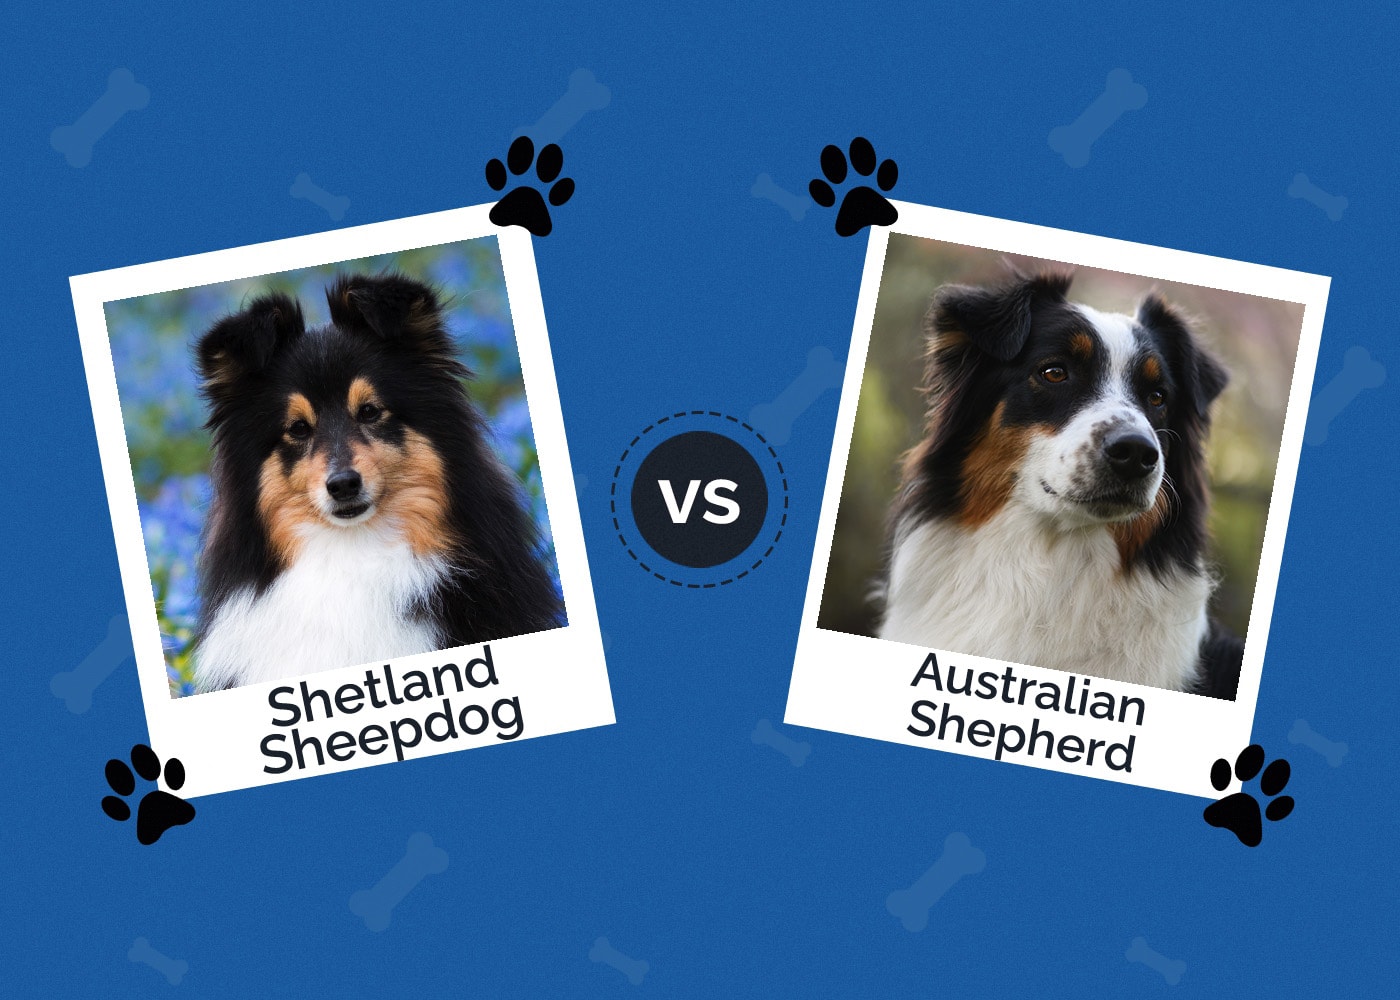 Shetland Sheepdog vs Australian Shepherd